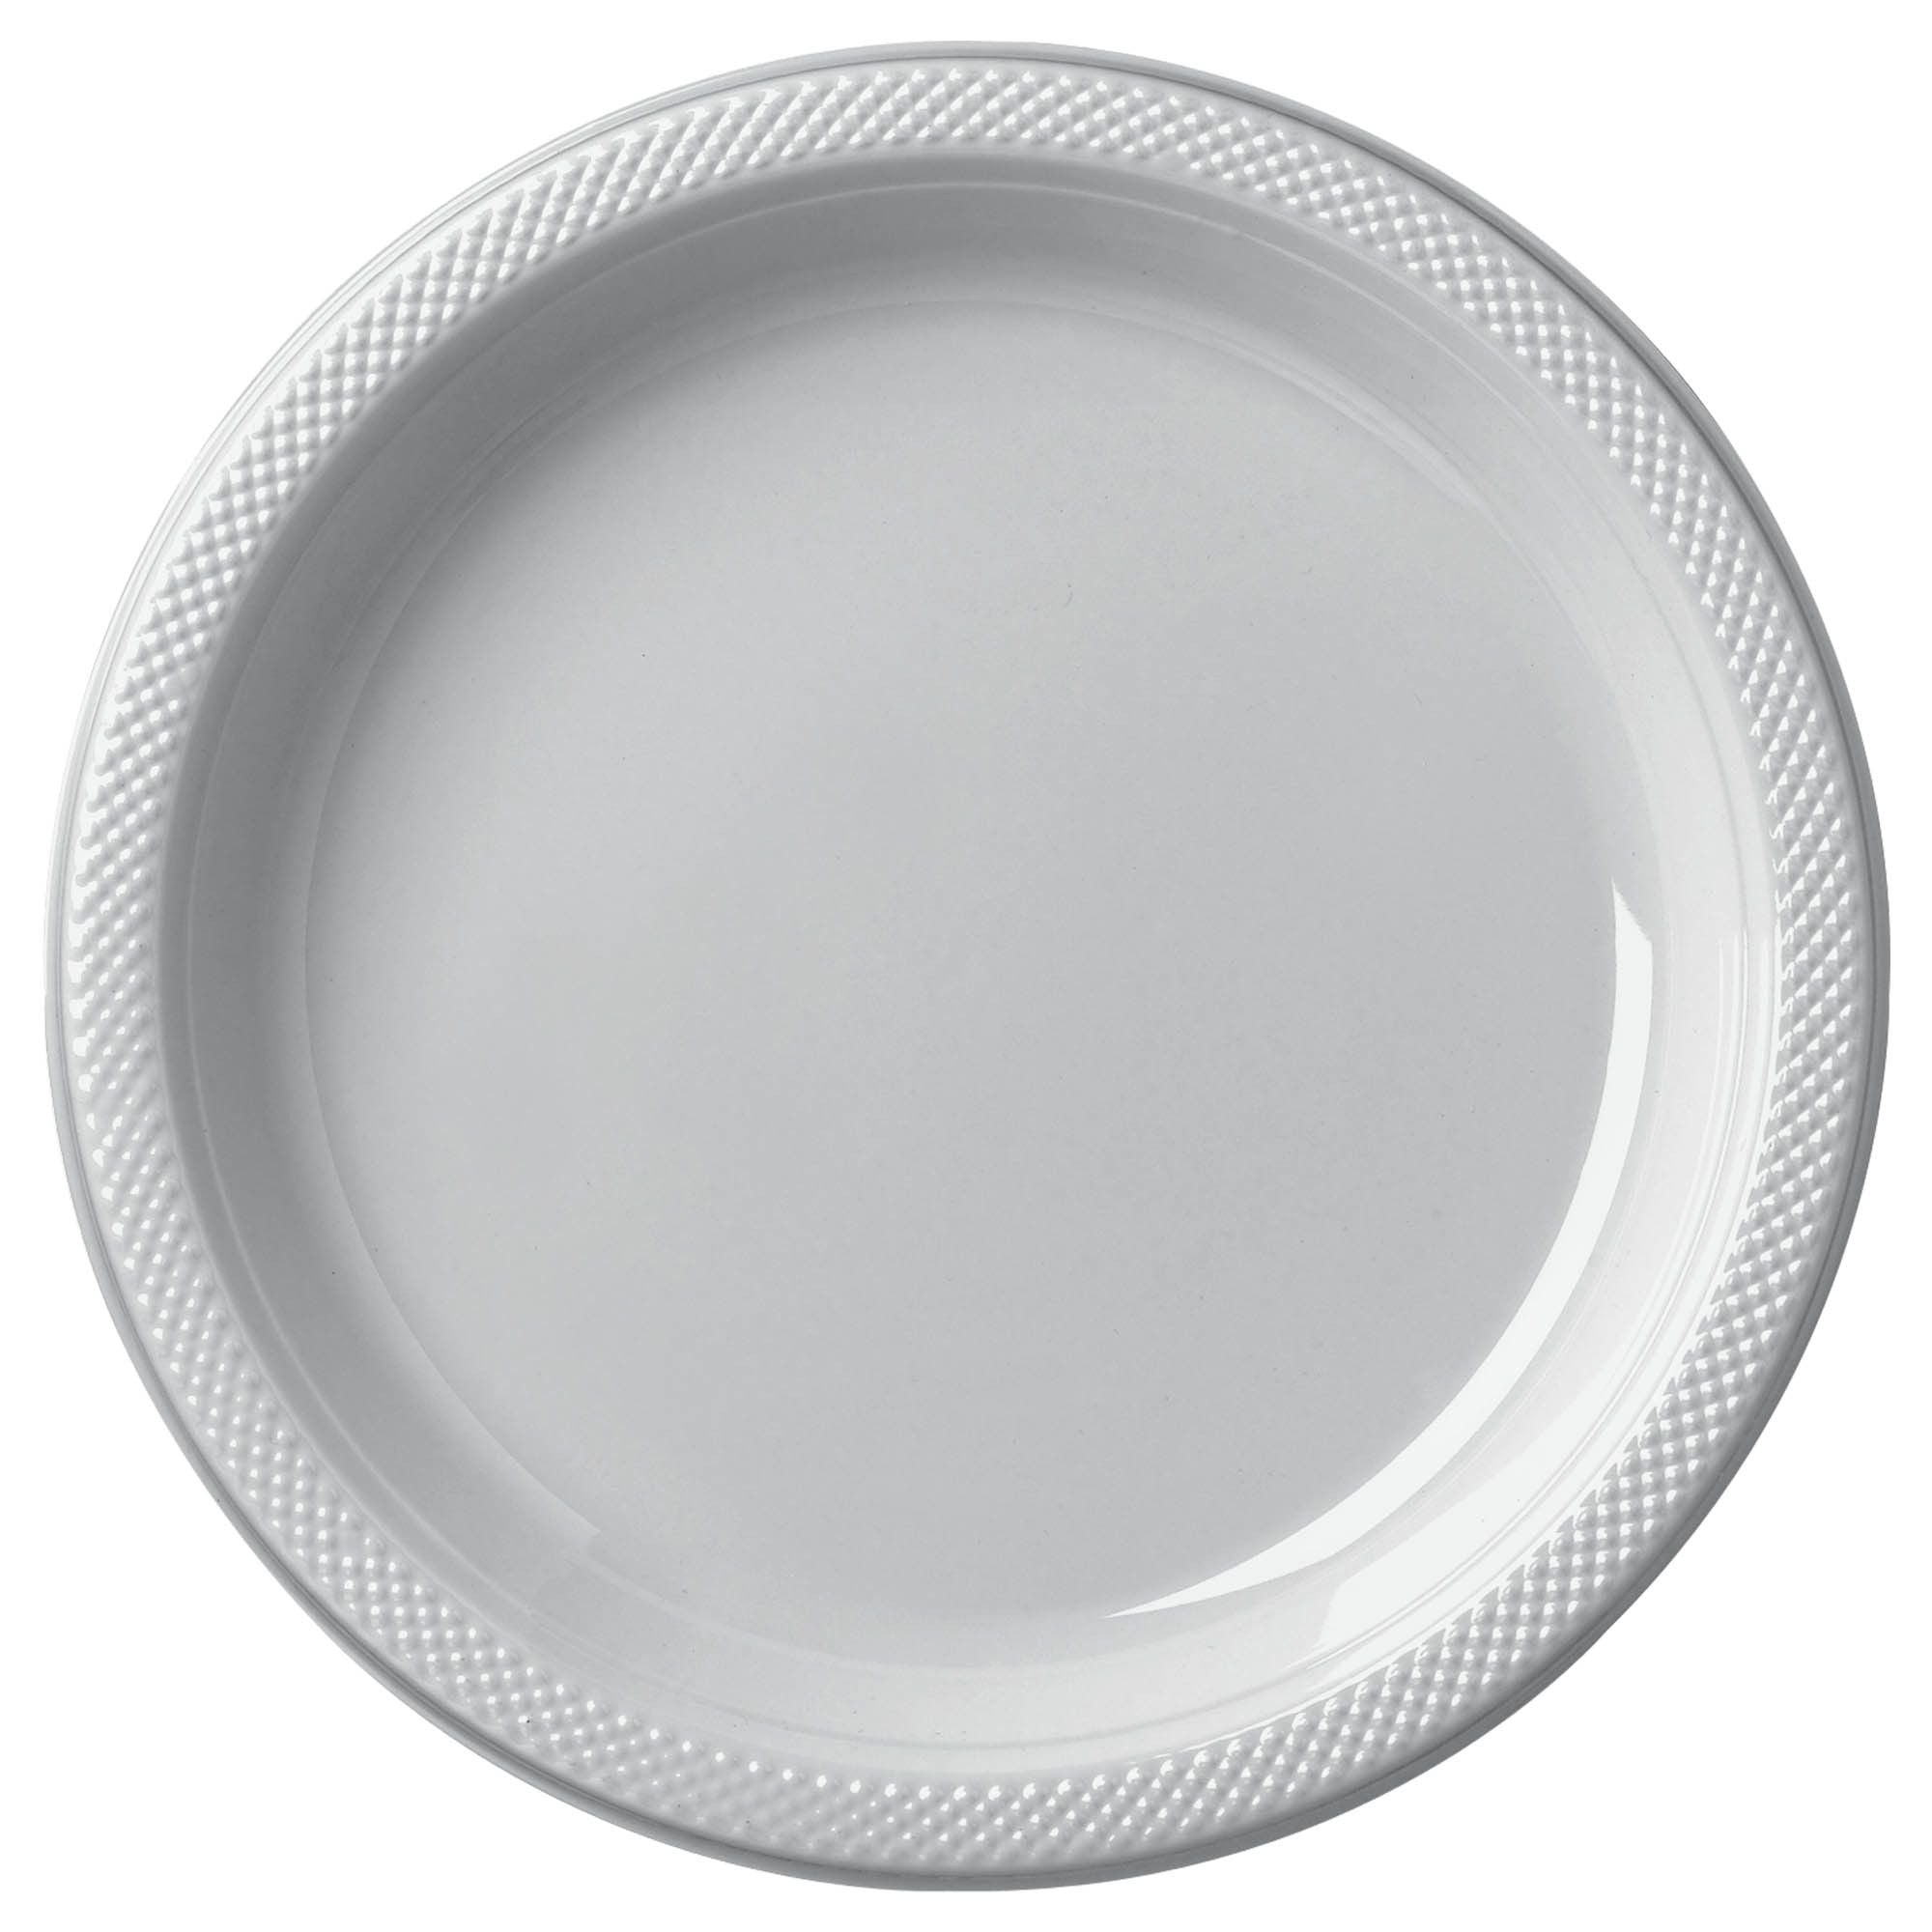 9" Round Plastic Plates - Silver 20CT